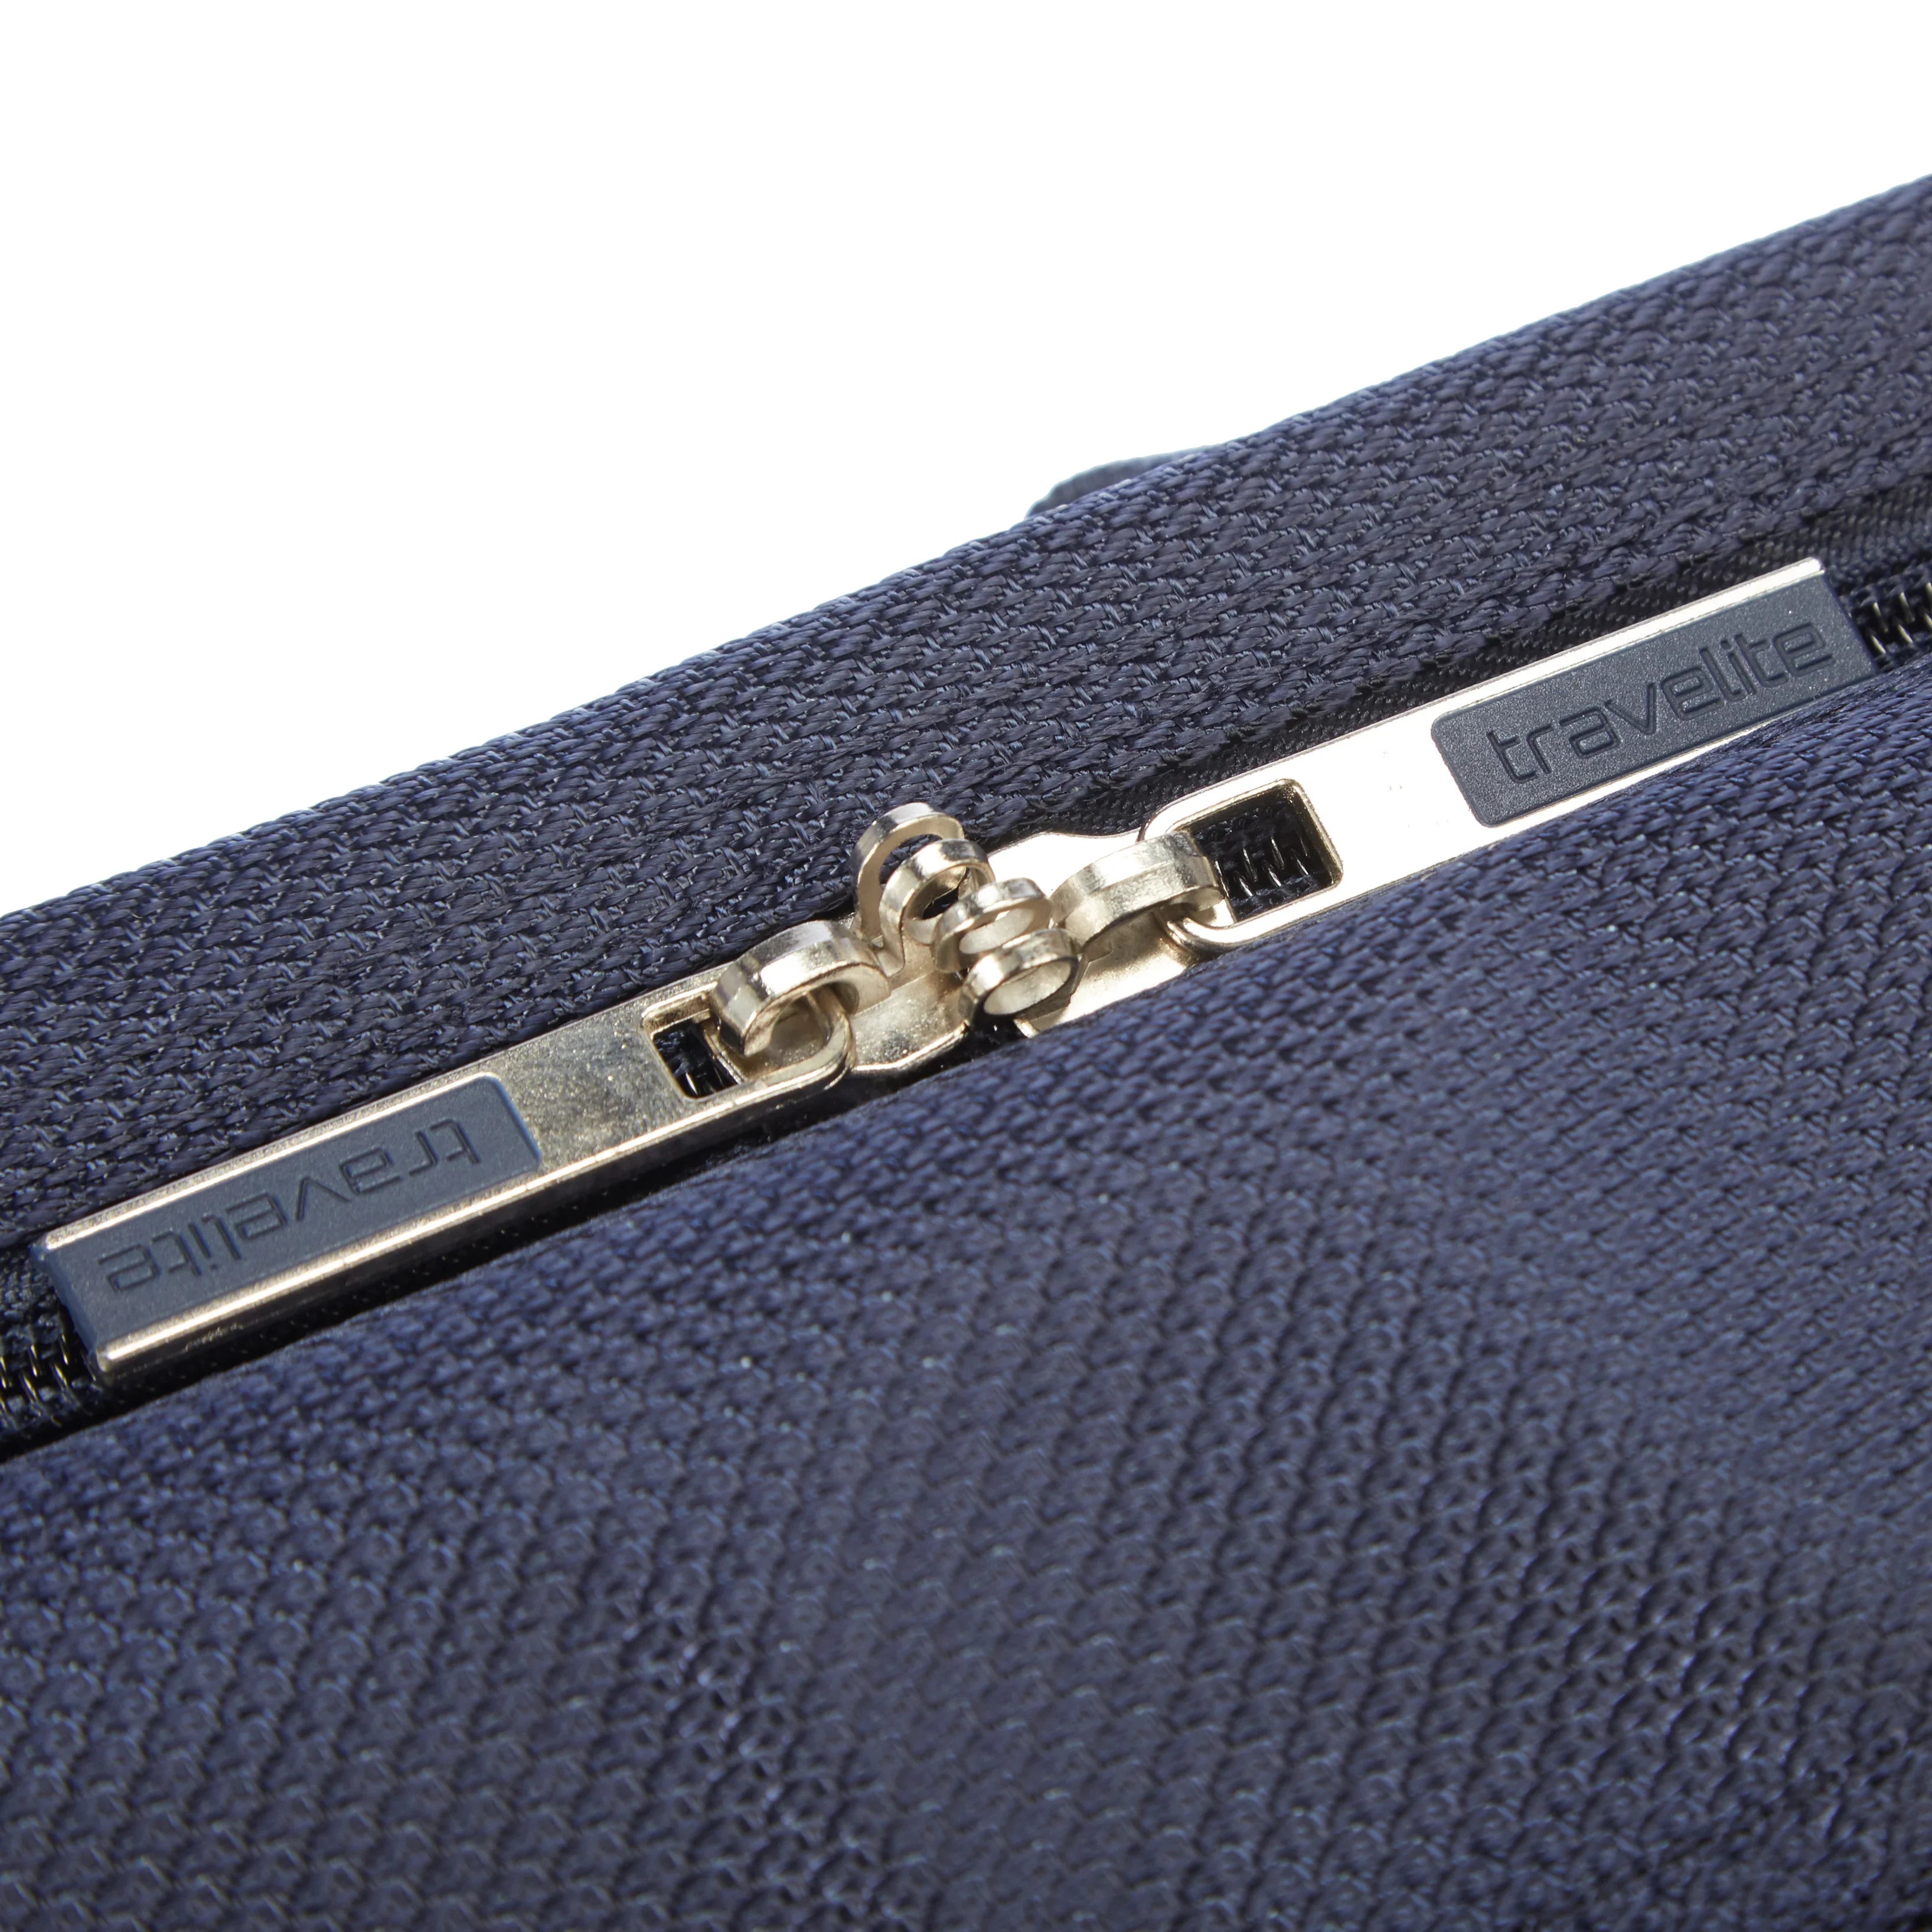 Travelite Miigo boarding bag 40 cm - deep sea blue